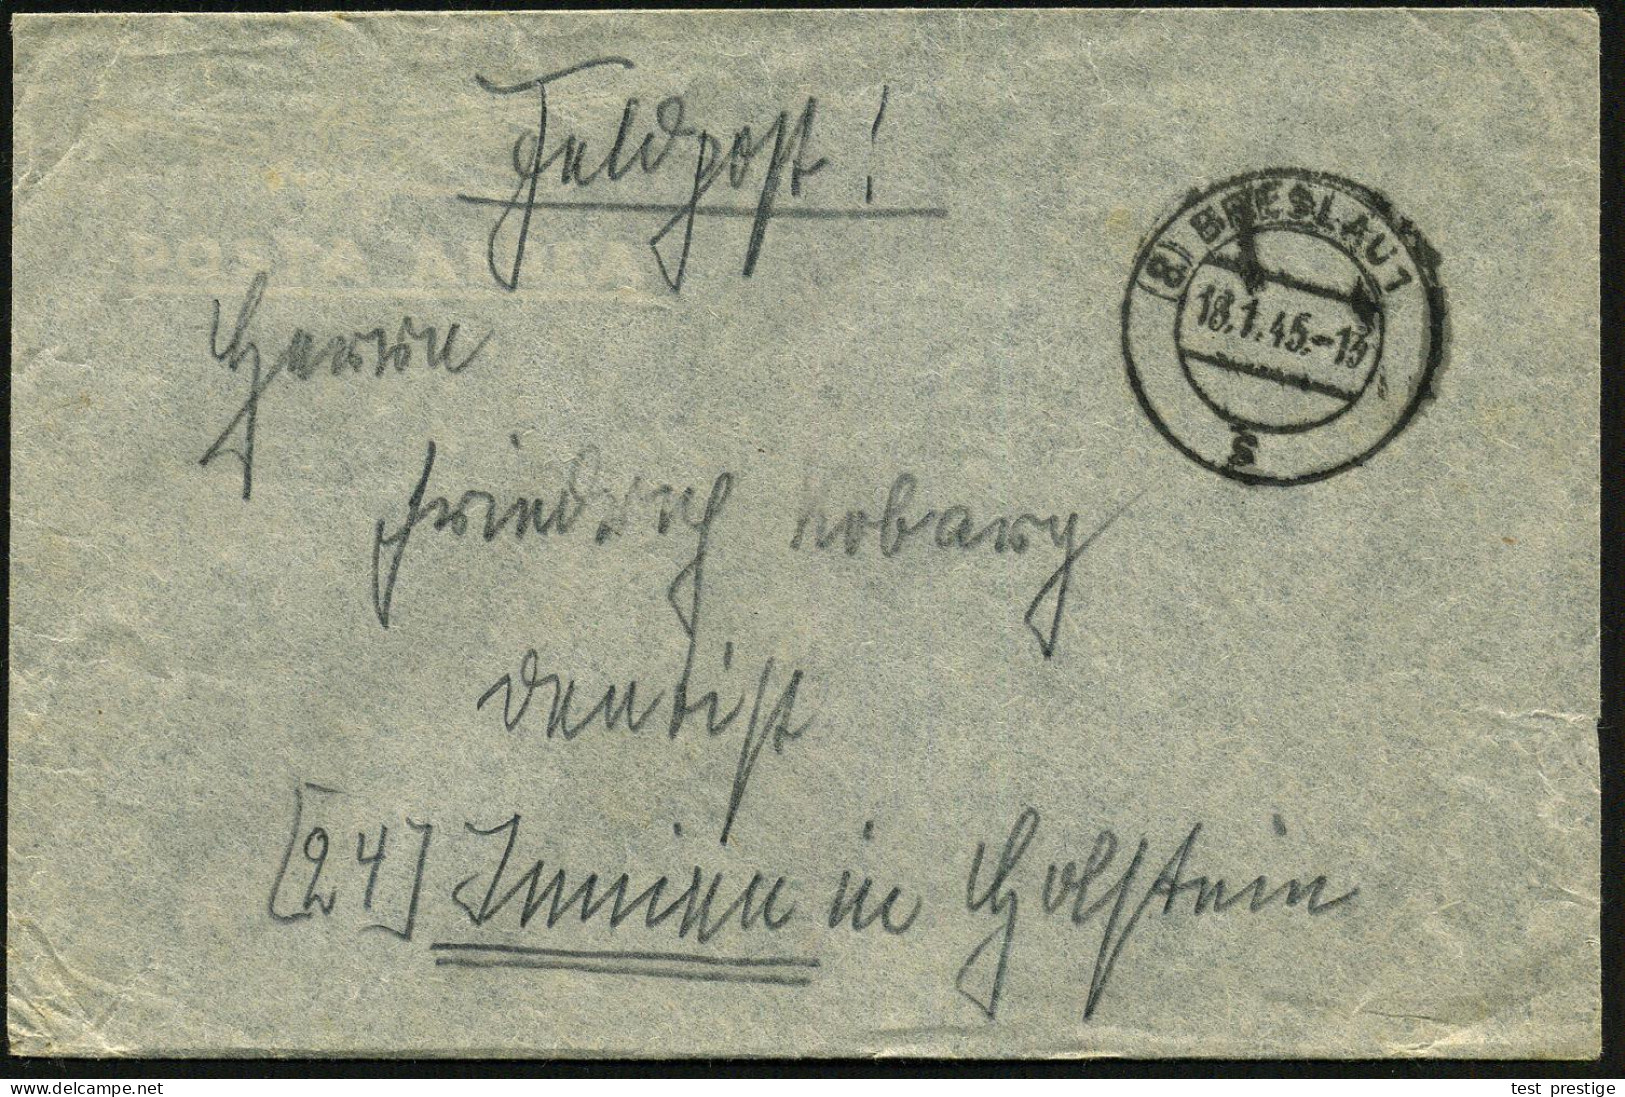 (8) BRESLAU 1/ S 1945 (18.1.) 2K-Steg Mit Postleitzahl ! + Rs. Hs. Fp.-Abs.: "..Leutnant.. Z. Zt. Breslau, Gren.(adier)  - Guerre Mondiale (Seconde)